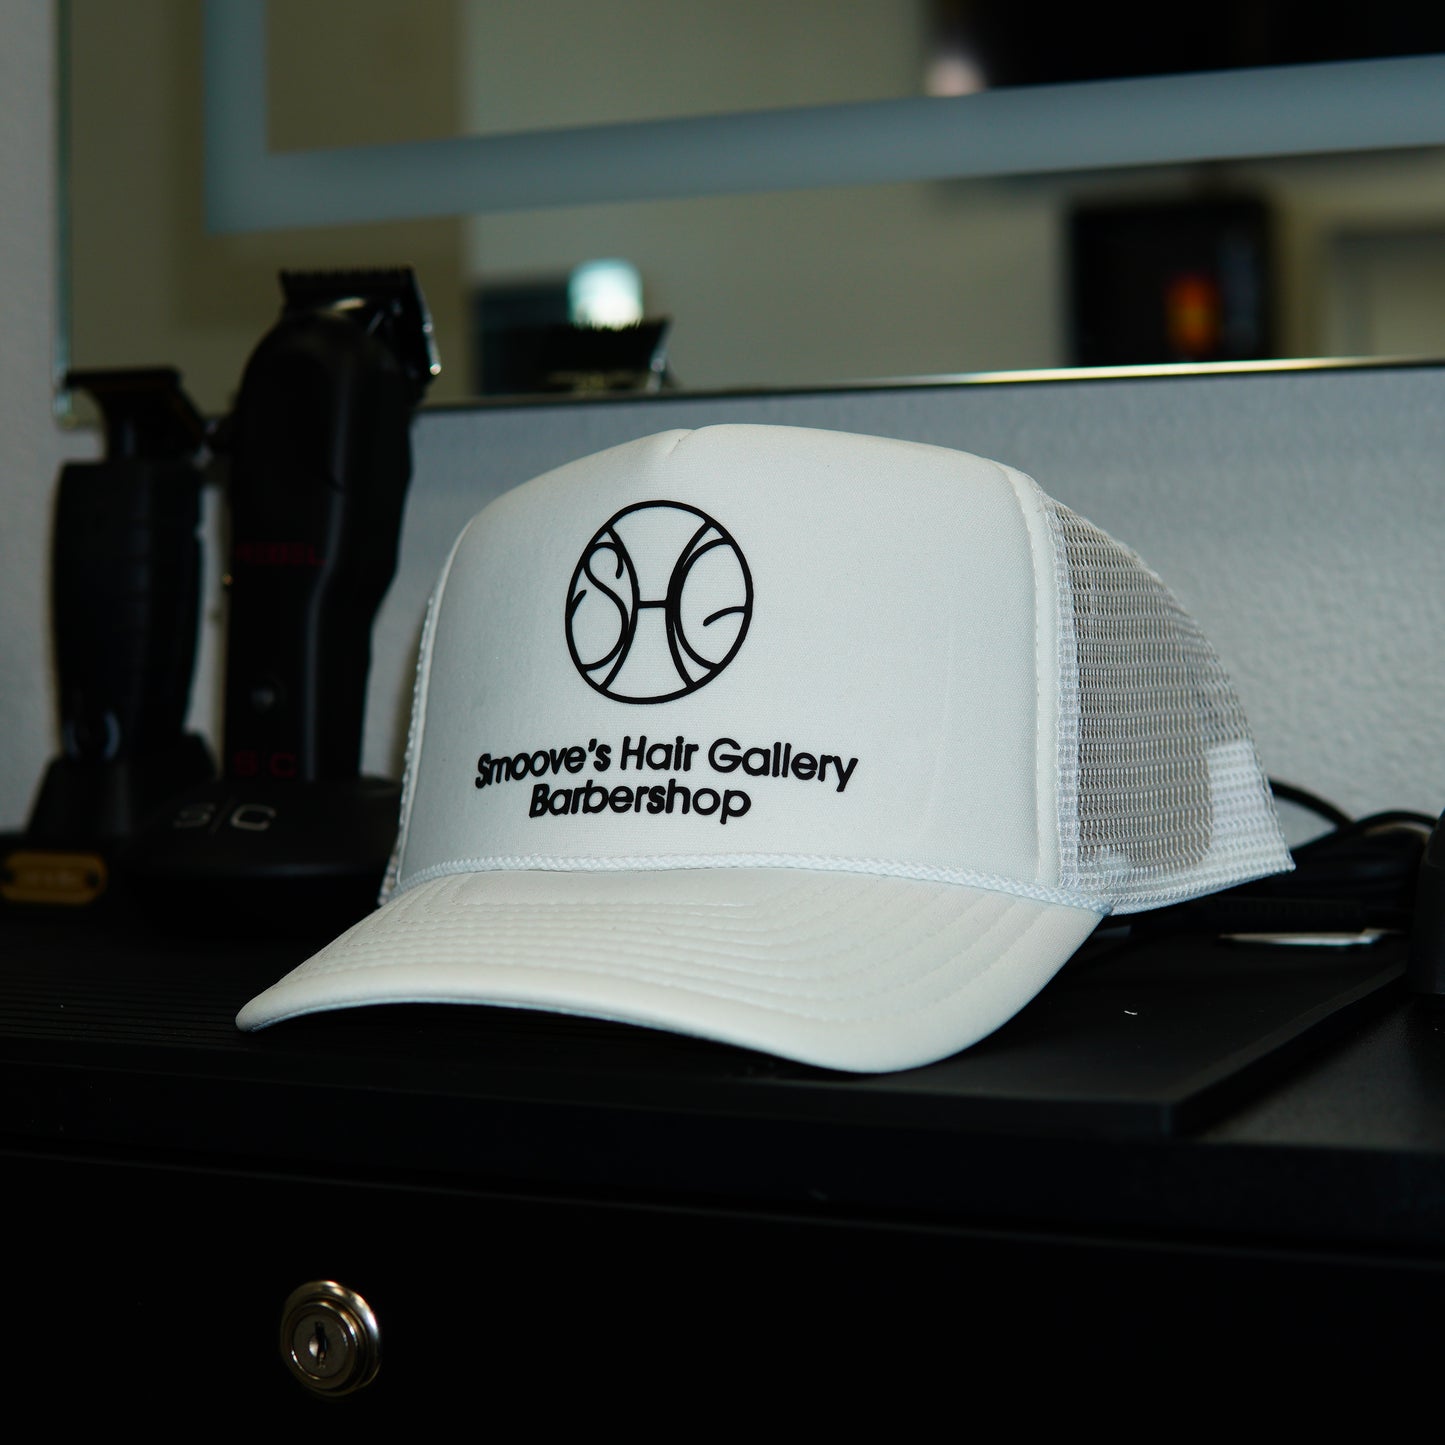 Smoove's Hair Gallery Barbershop Logo White Trucker Hat